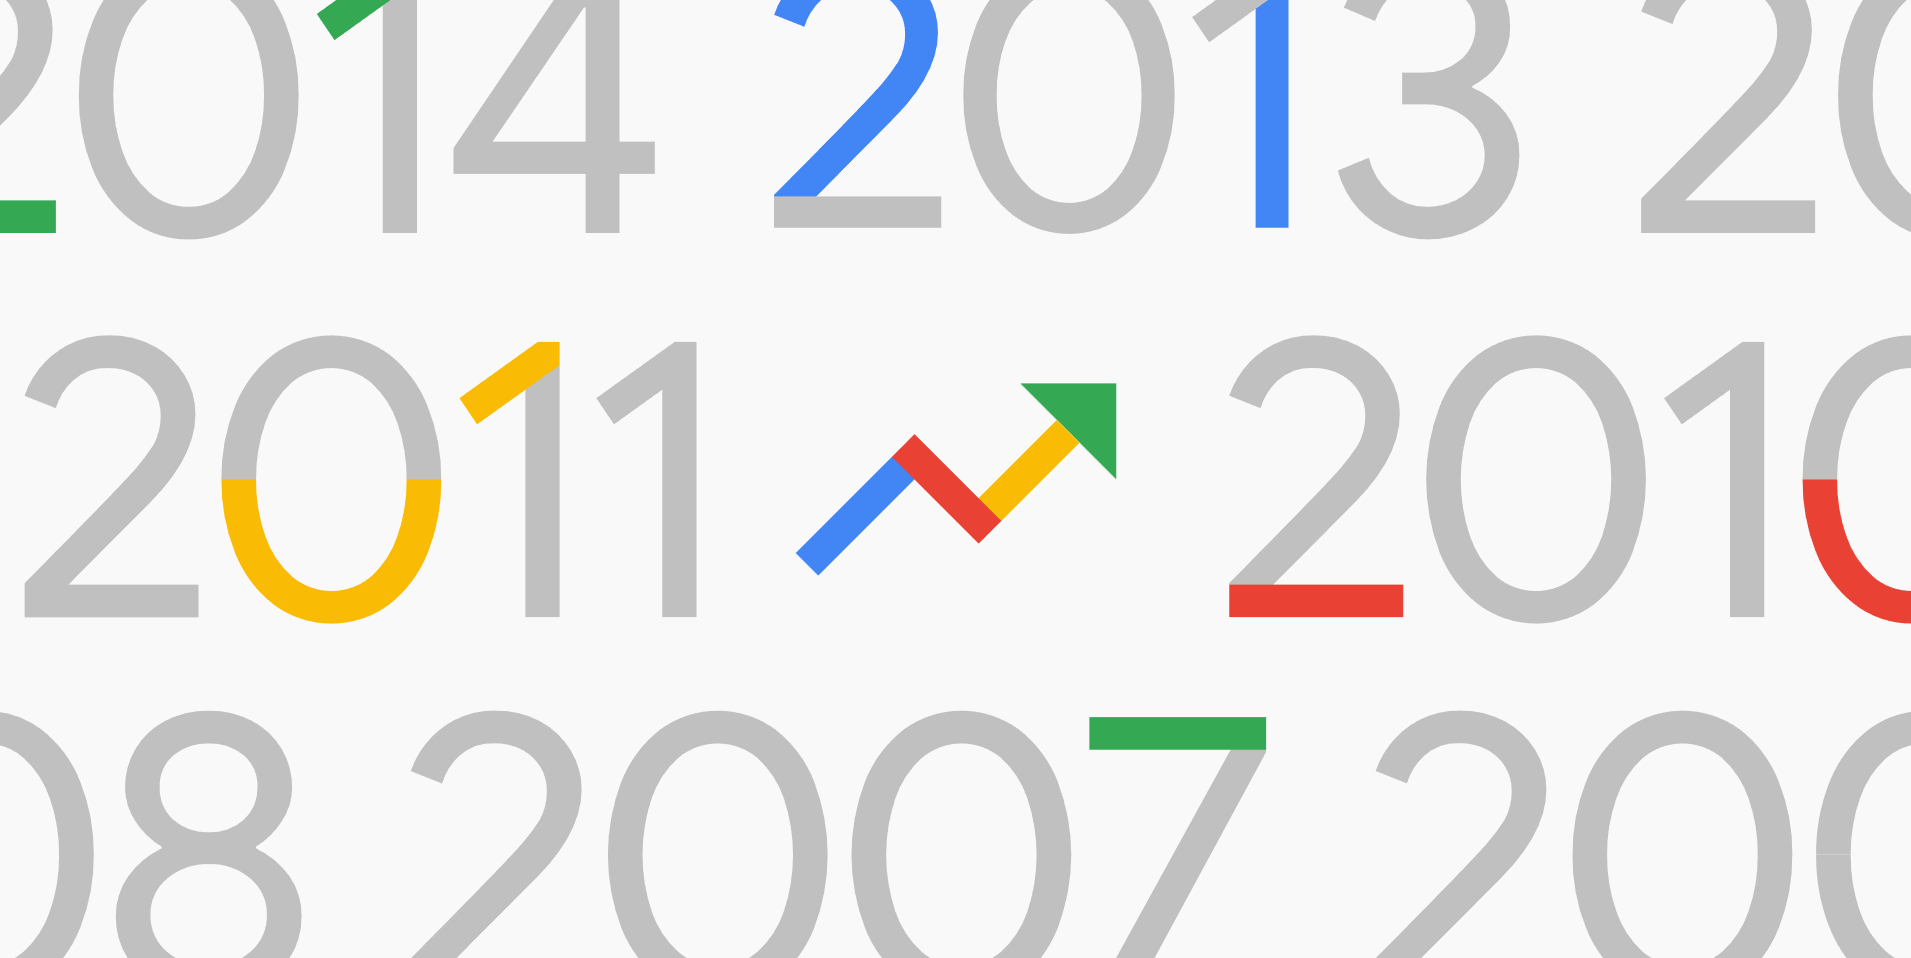 Google Trends - Visualizing Google data